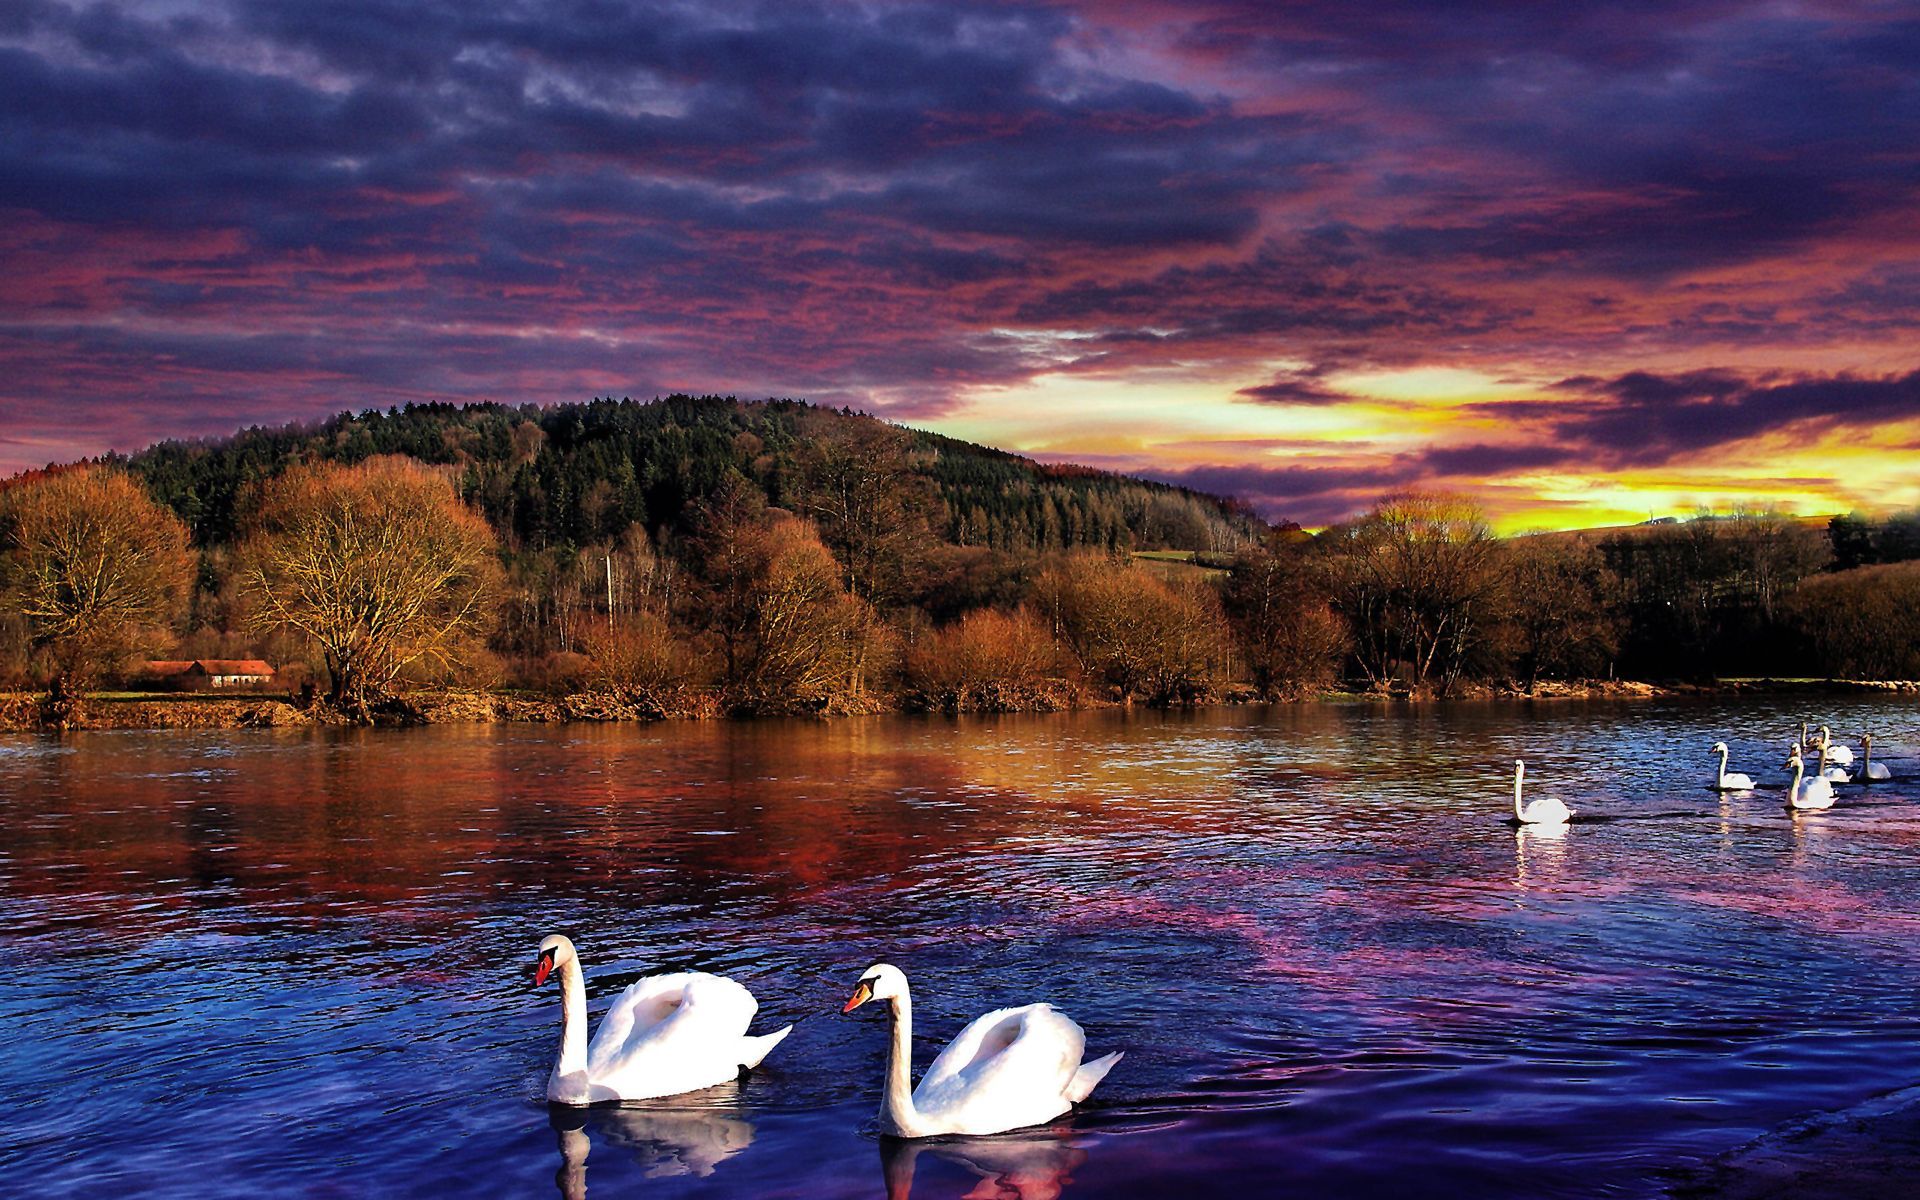 Lake Sunset. Lake swans sunset Wallpaper Picture Photo Image